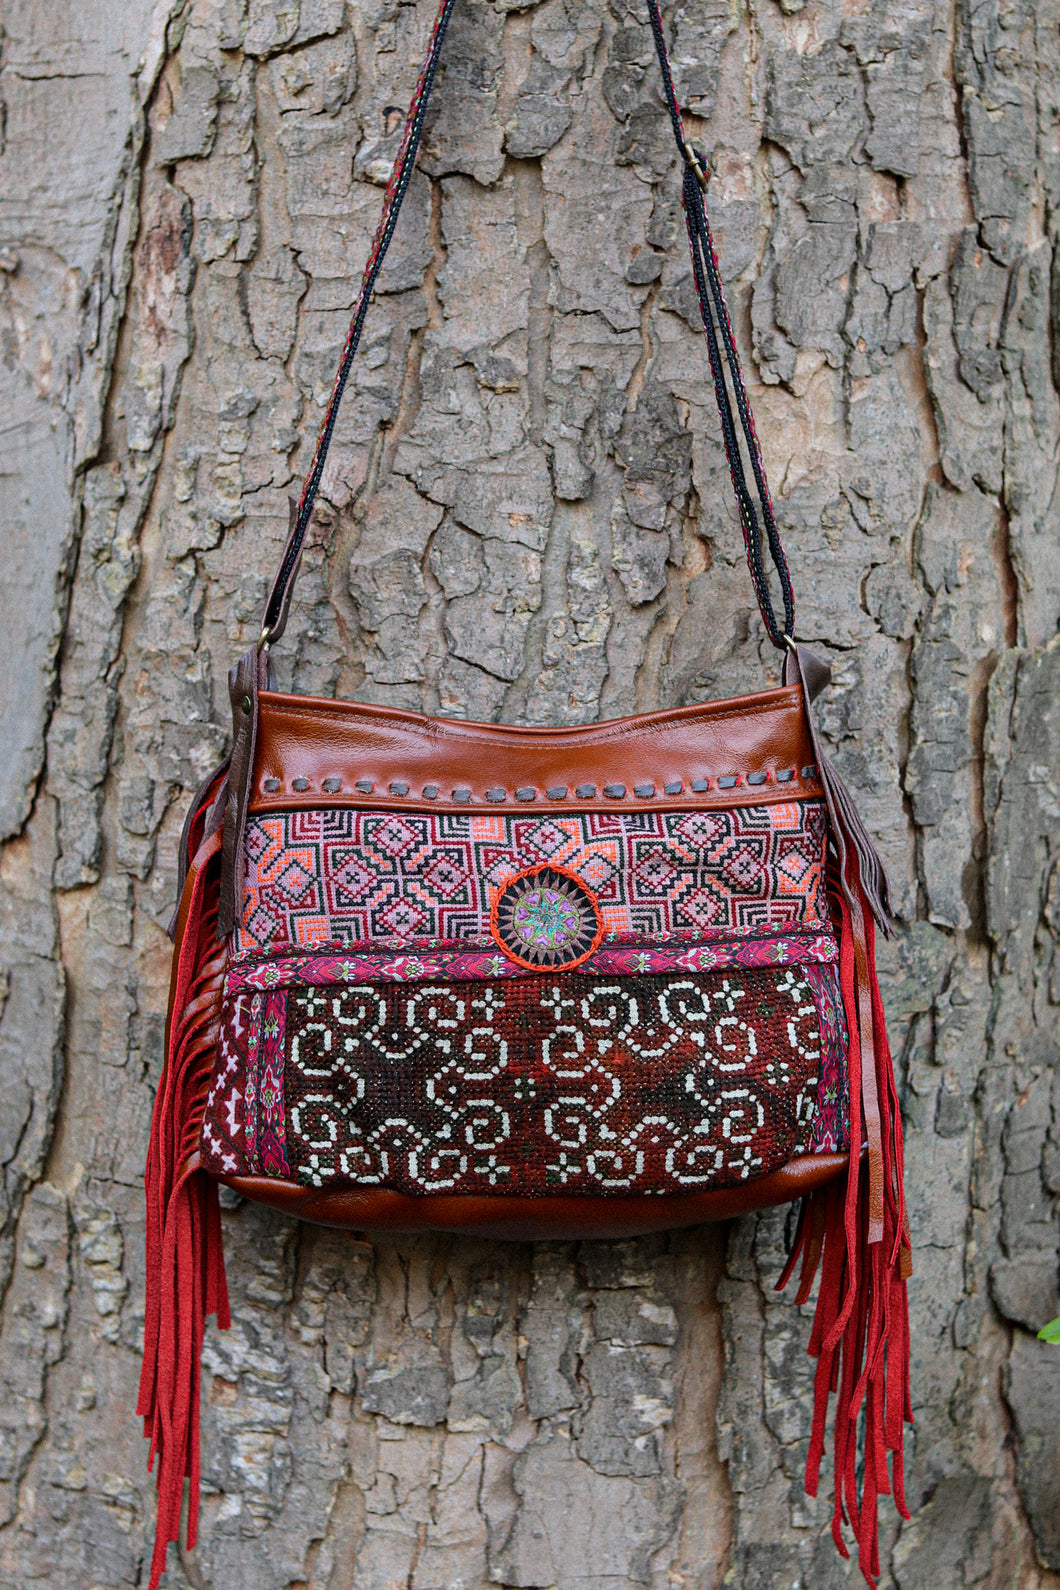 Boho Embroidered Vintage Recycled Hmong Bag